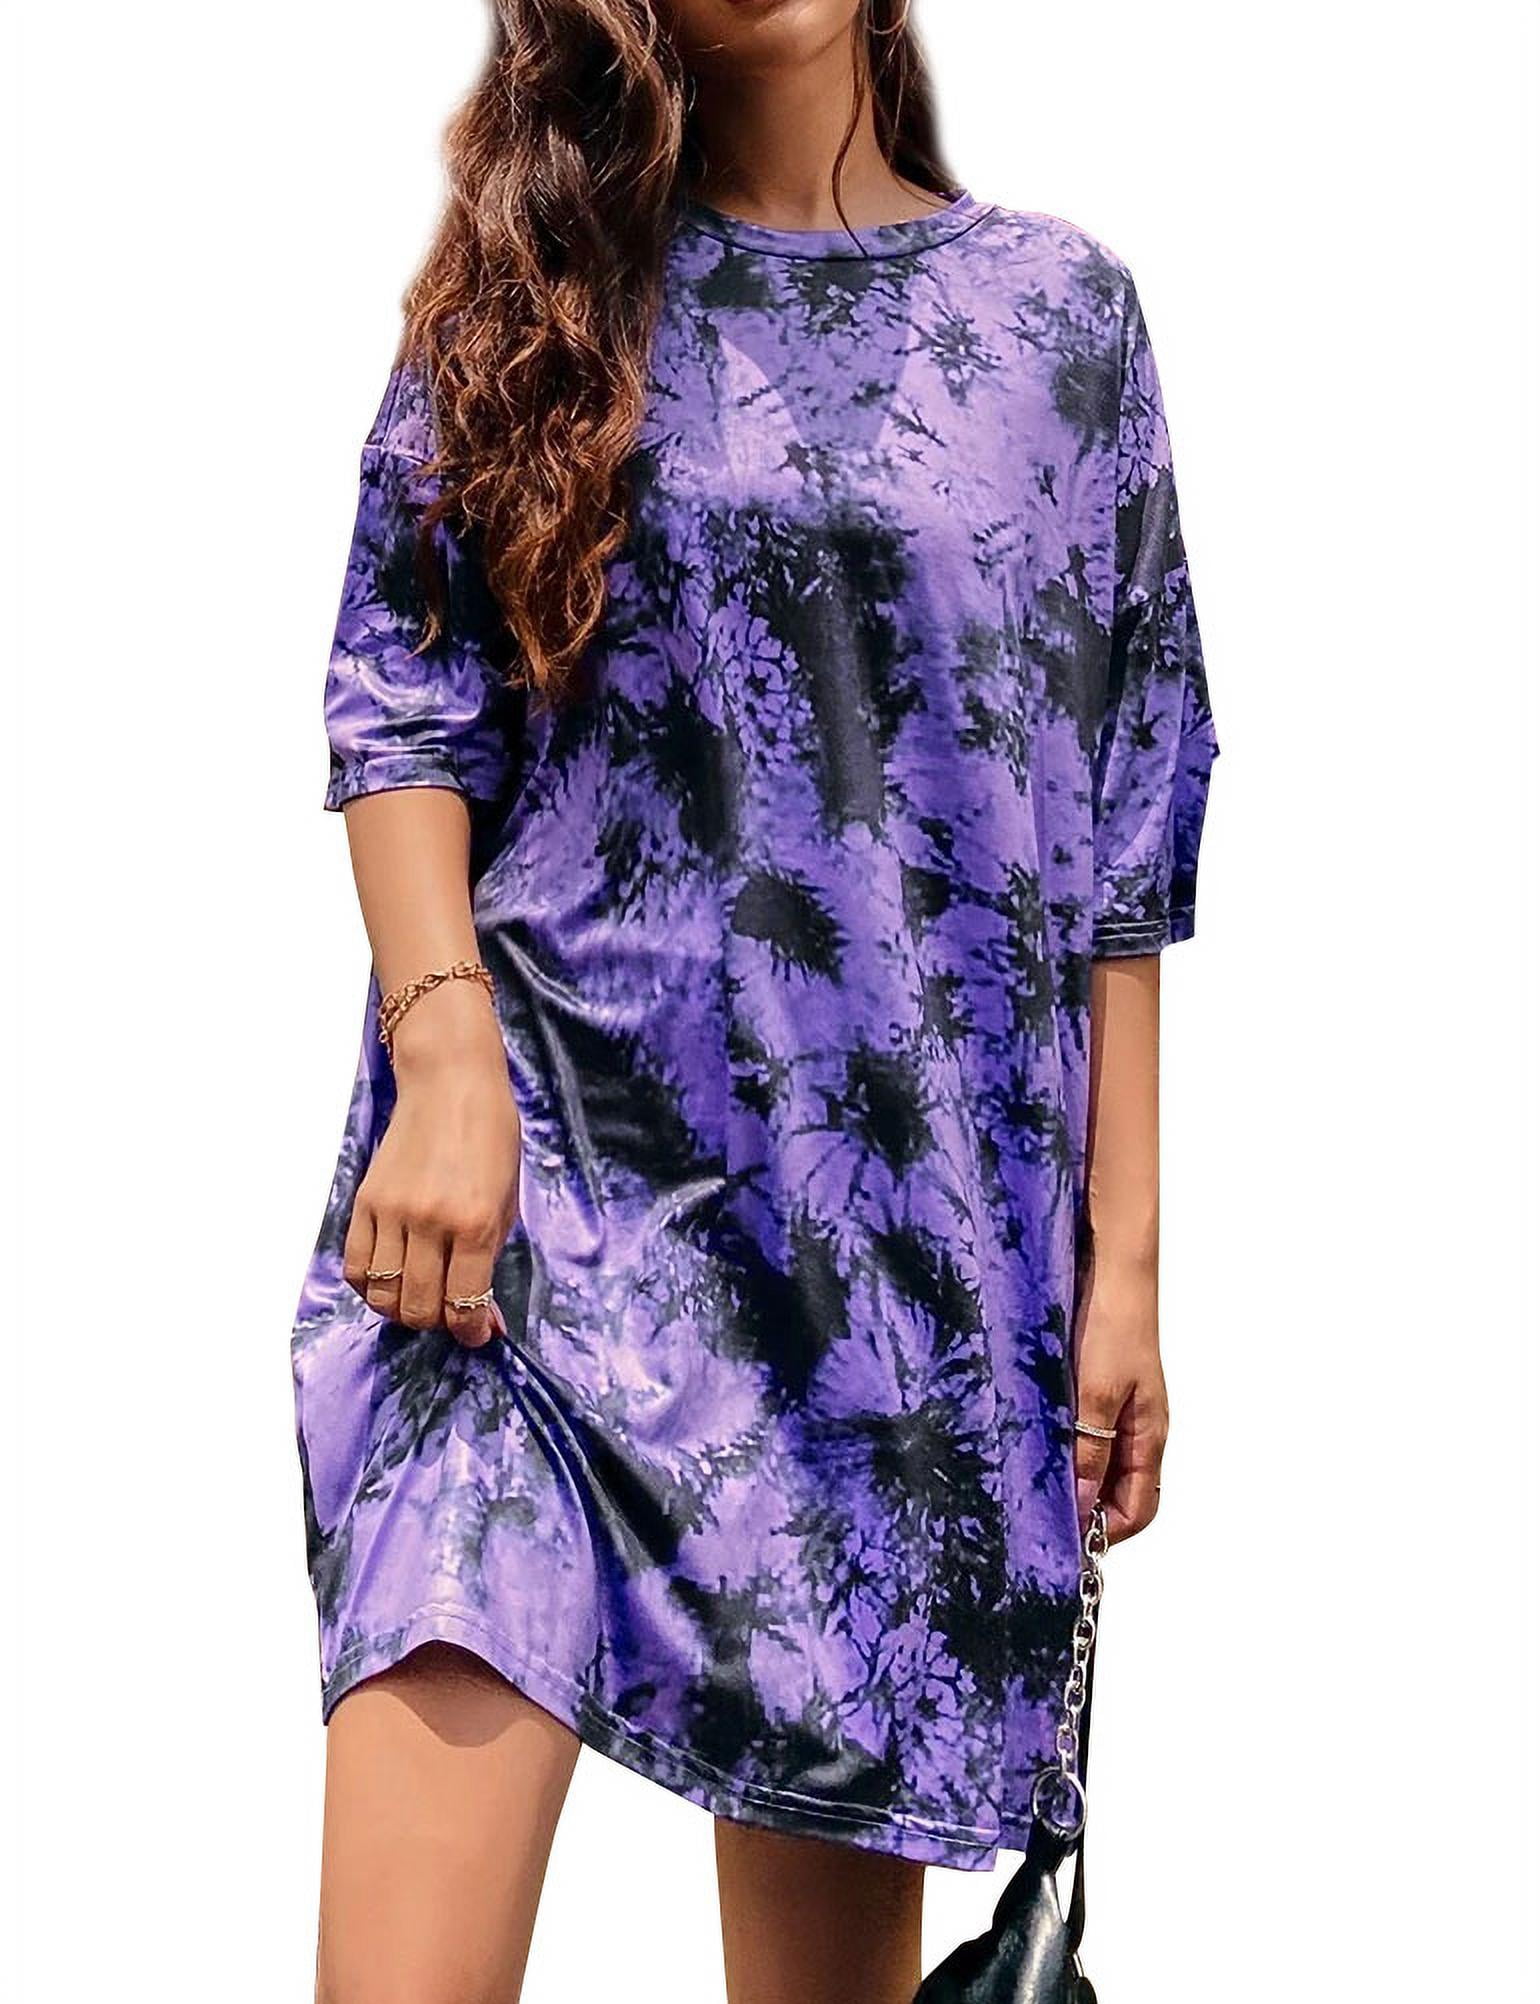 ZXZY Women Tie-Dyeing Crew Neck Half Sleeves T-shirt Dress